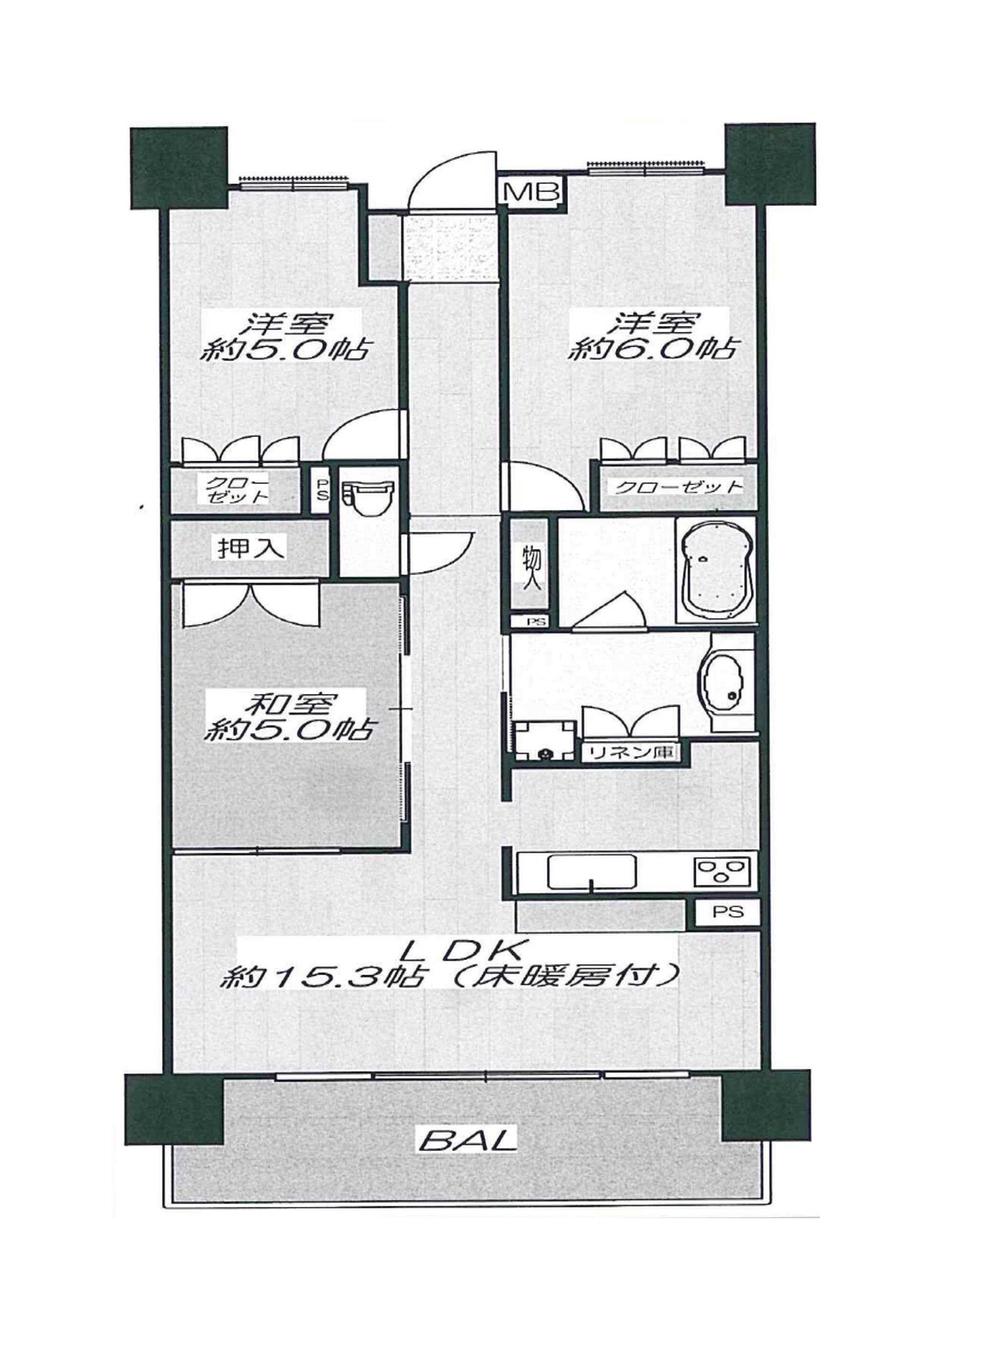 Floor plan. 3LDK, Price 20.8 million yen, Occupied area 70.07 sq m , Balcony area 11.21 sq m